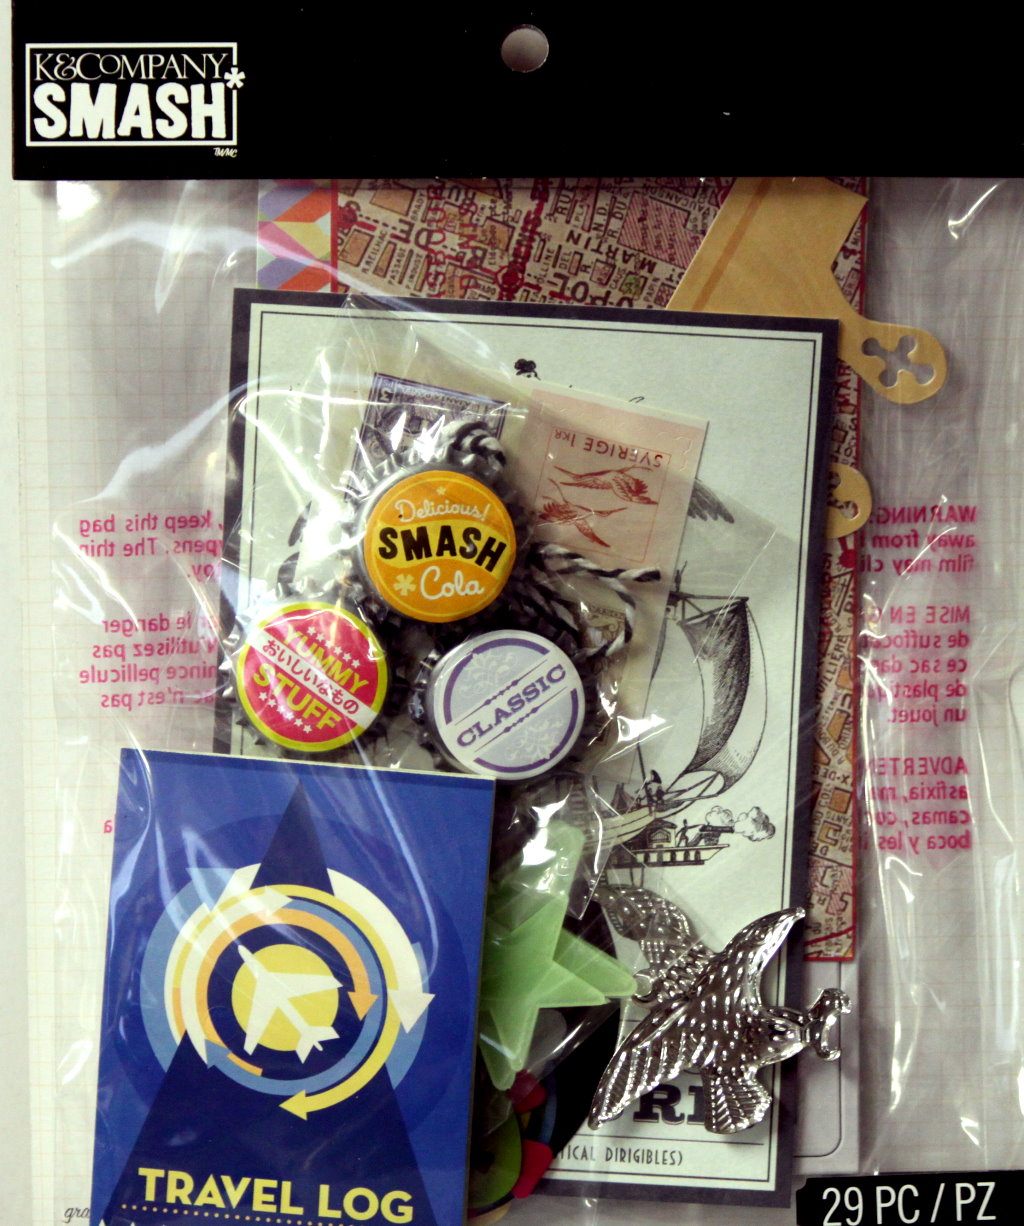 K & Company Smash Classic Grab Bag Kit